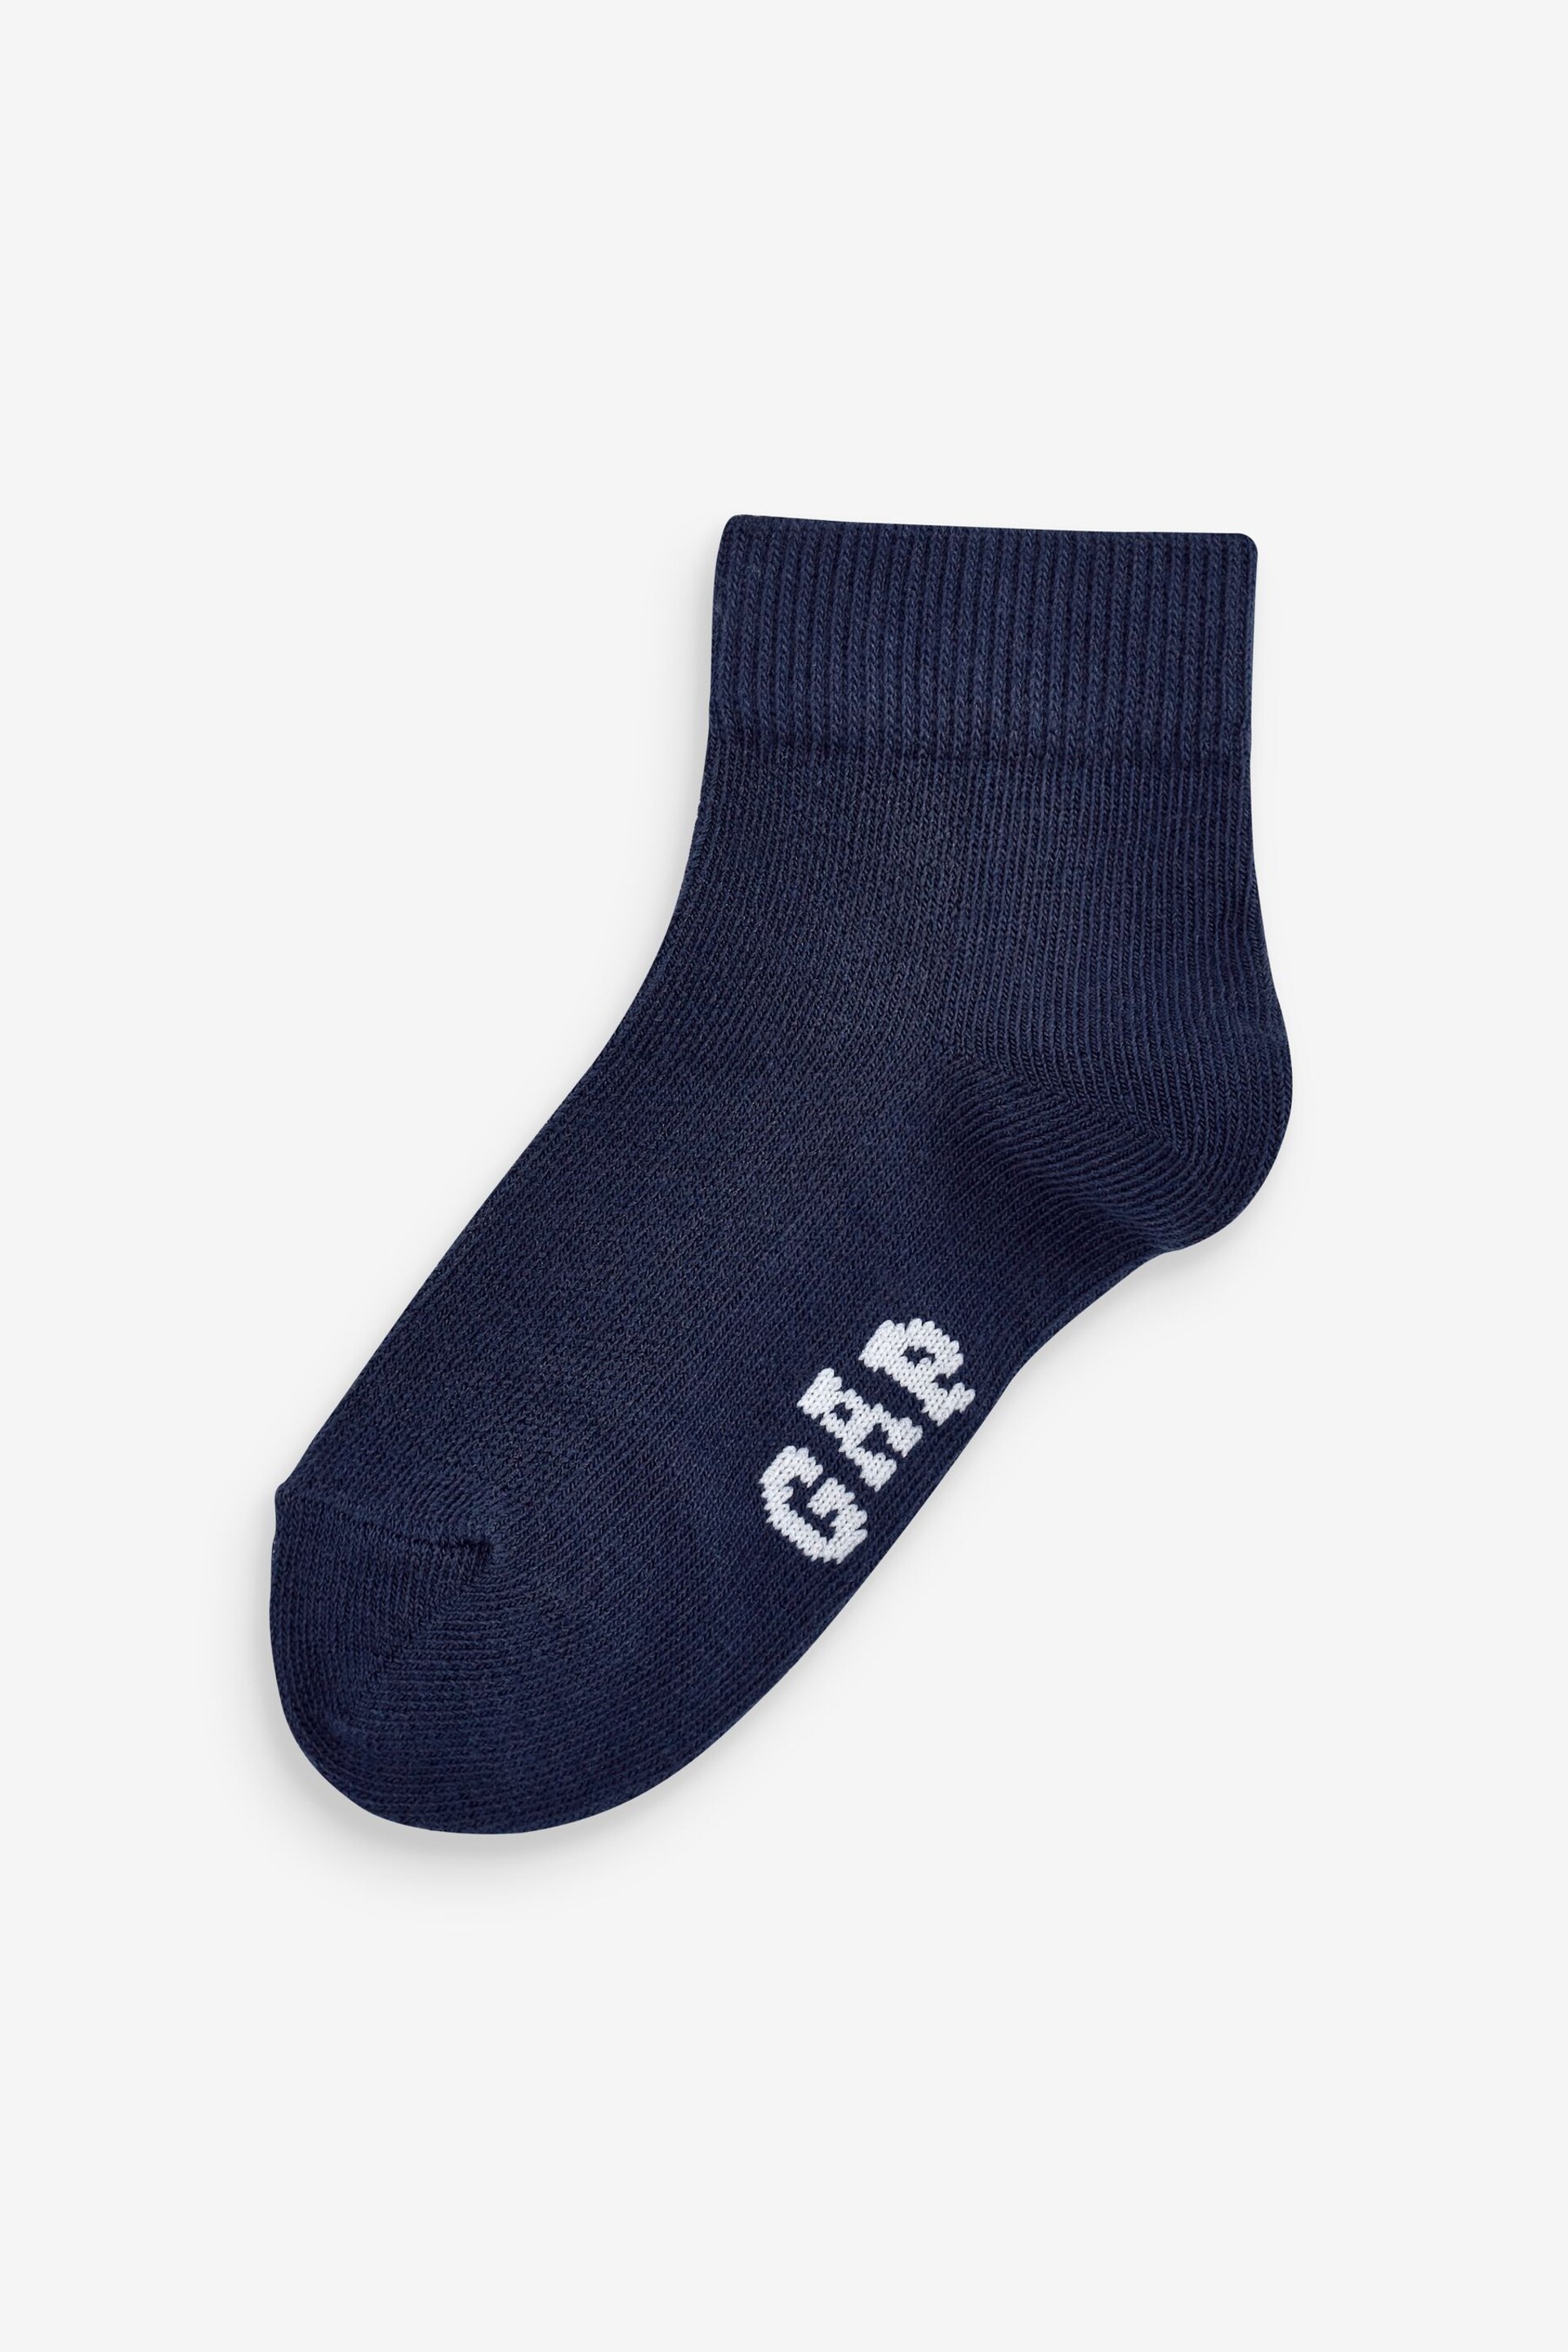 Gap Grey Kids Logo Quarter Crew Socks 3 Pack - Image 4 of 4